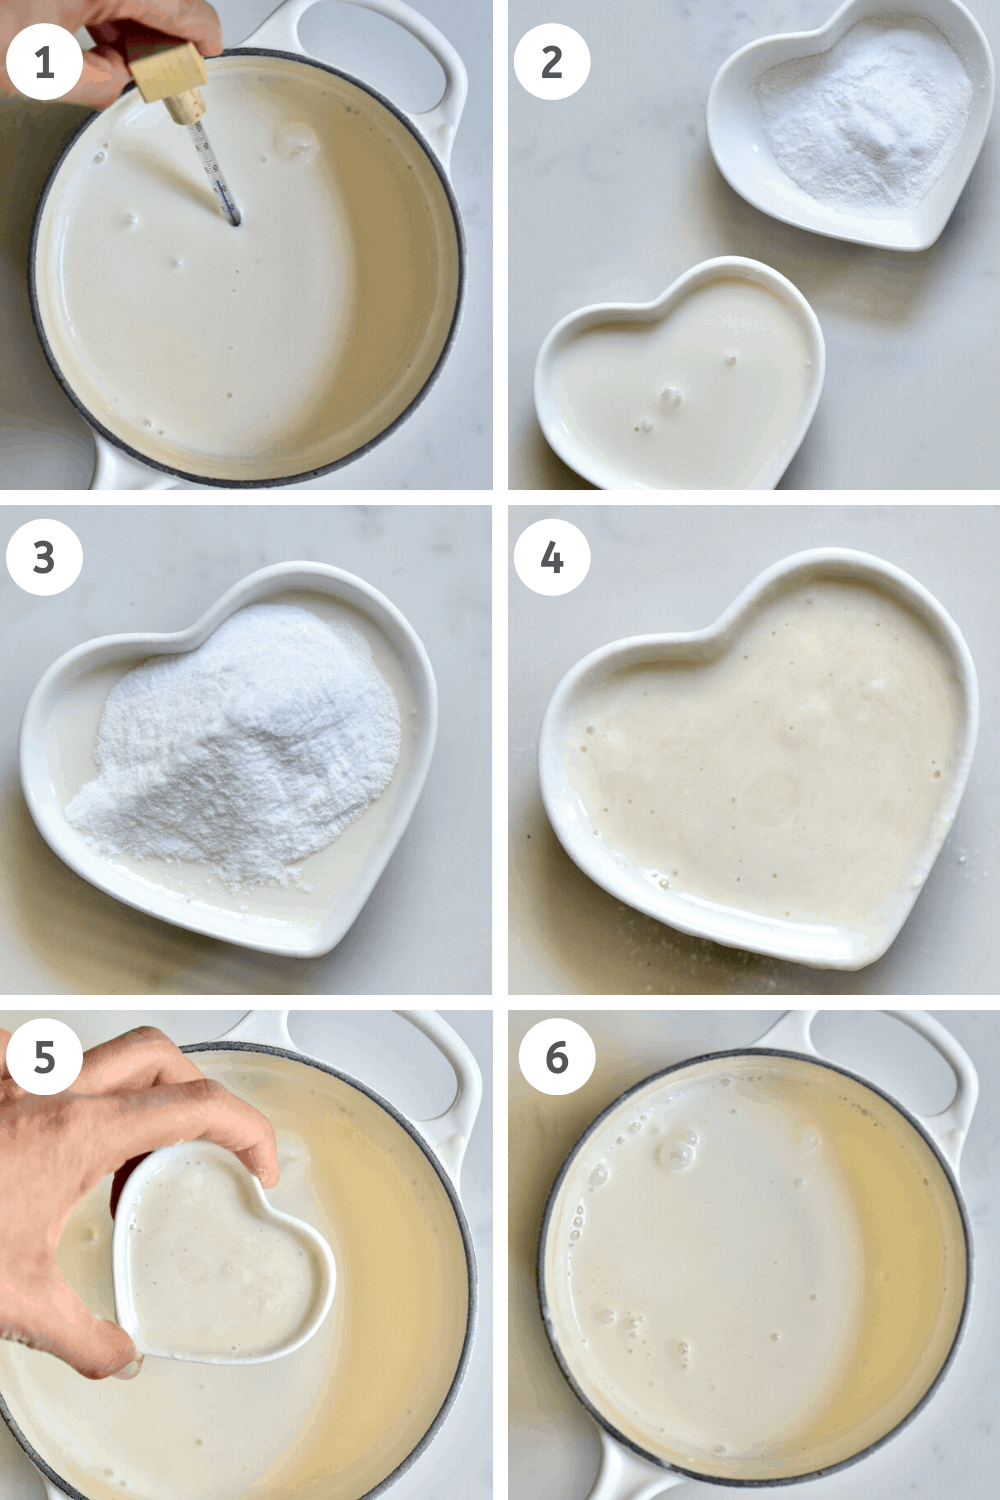 the steps for how to make homemade yogurt